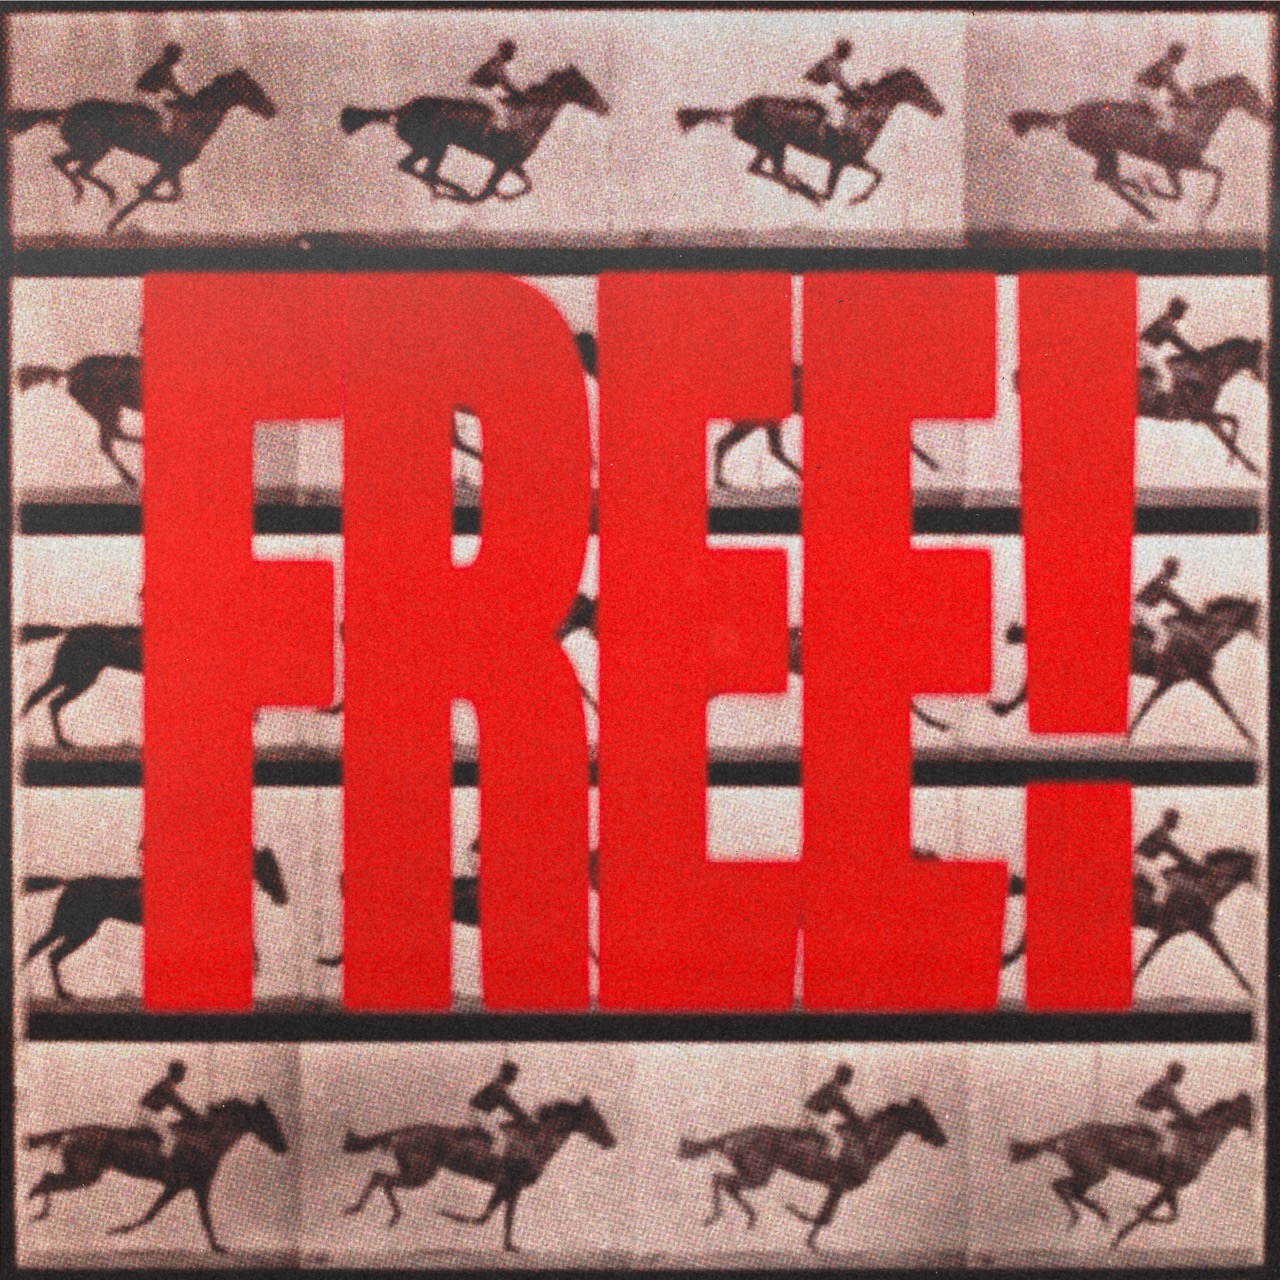 SEU Worship's song "Free!" cover art